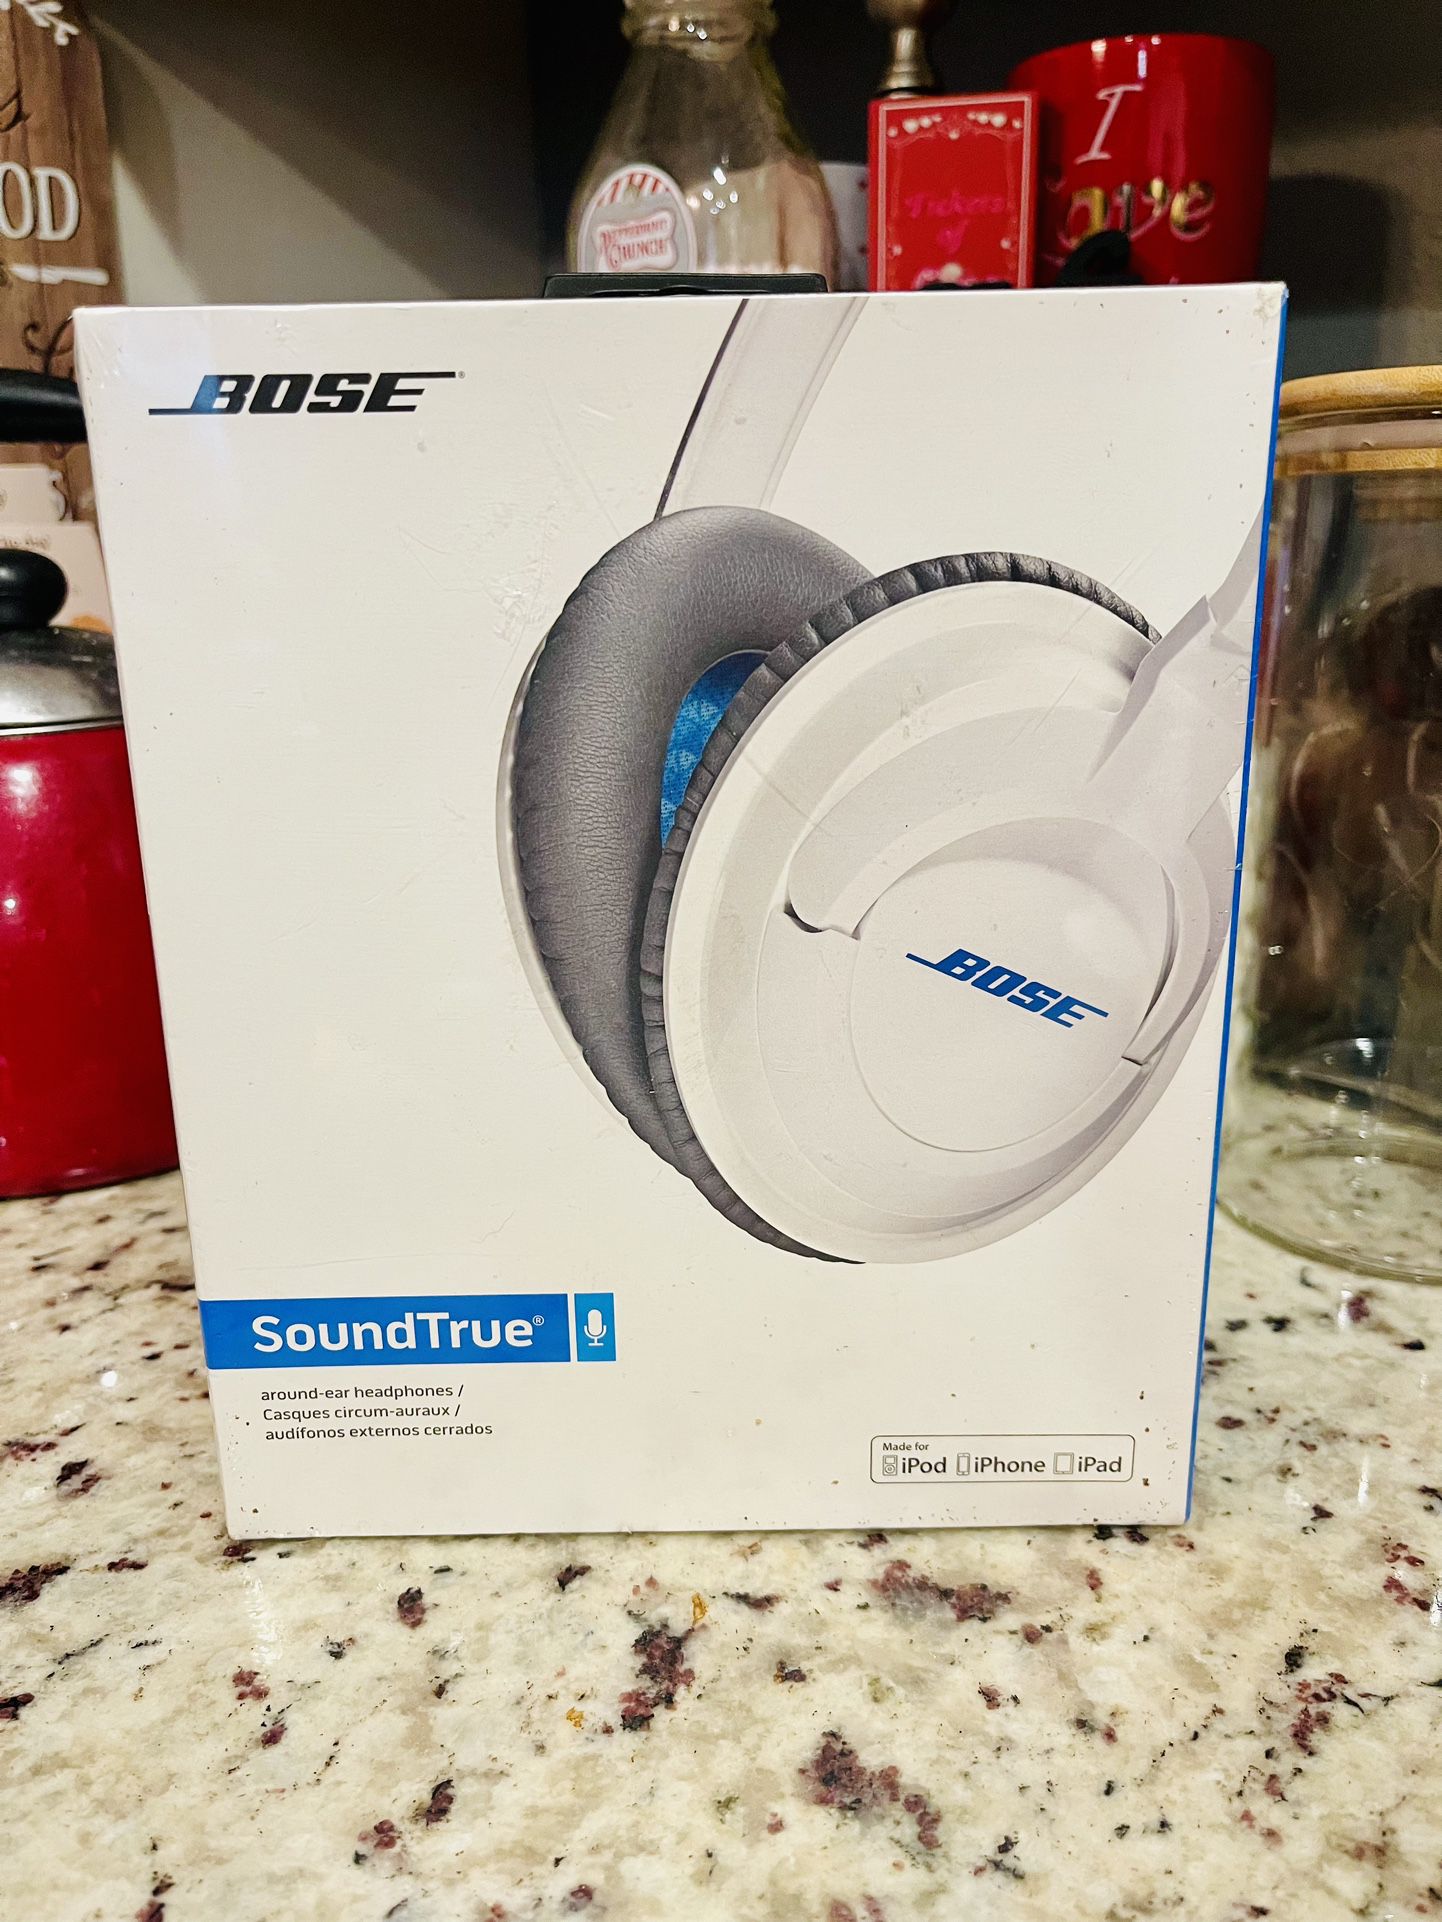 BOSE Sound True Around The Ear Headphones $75